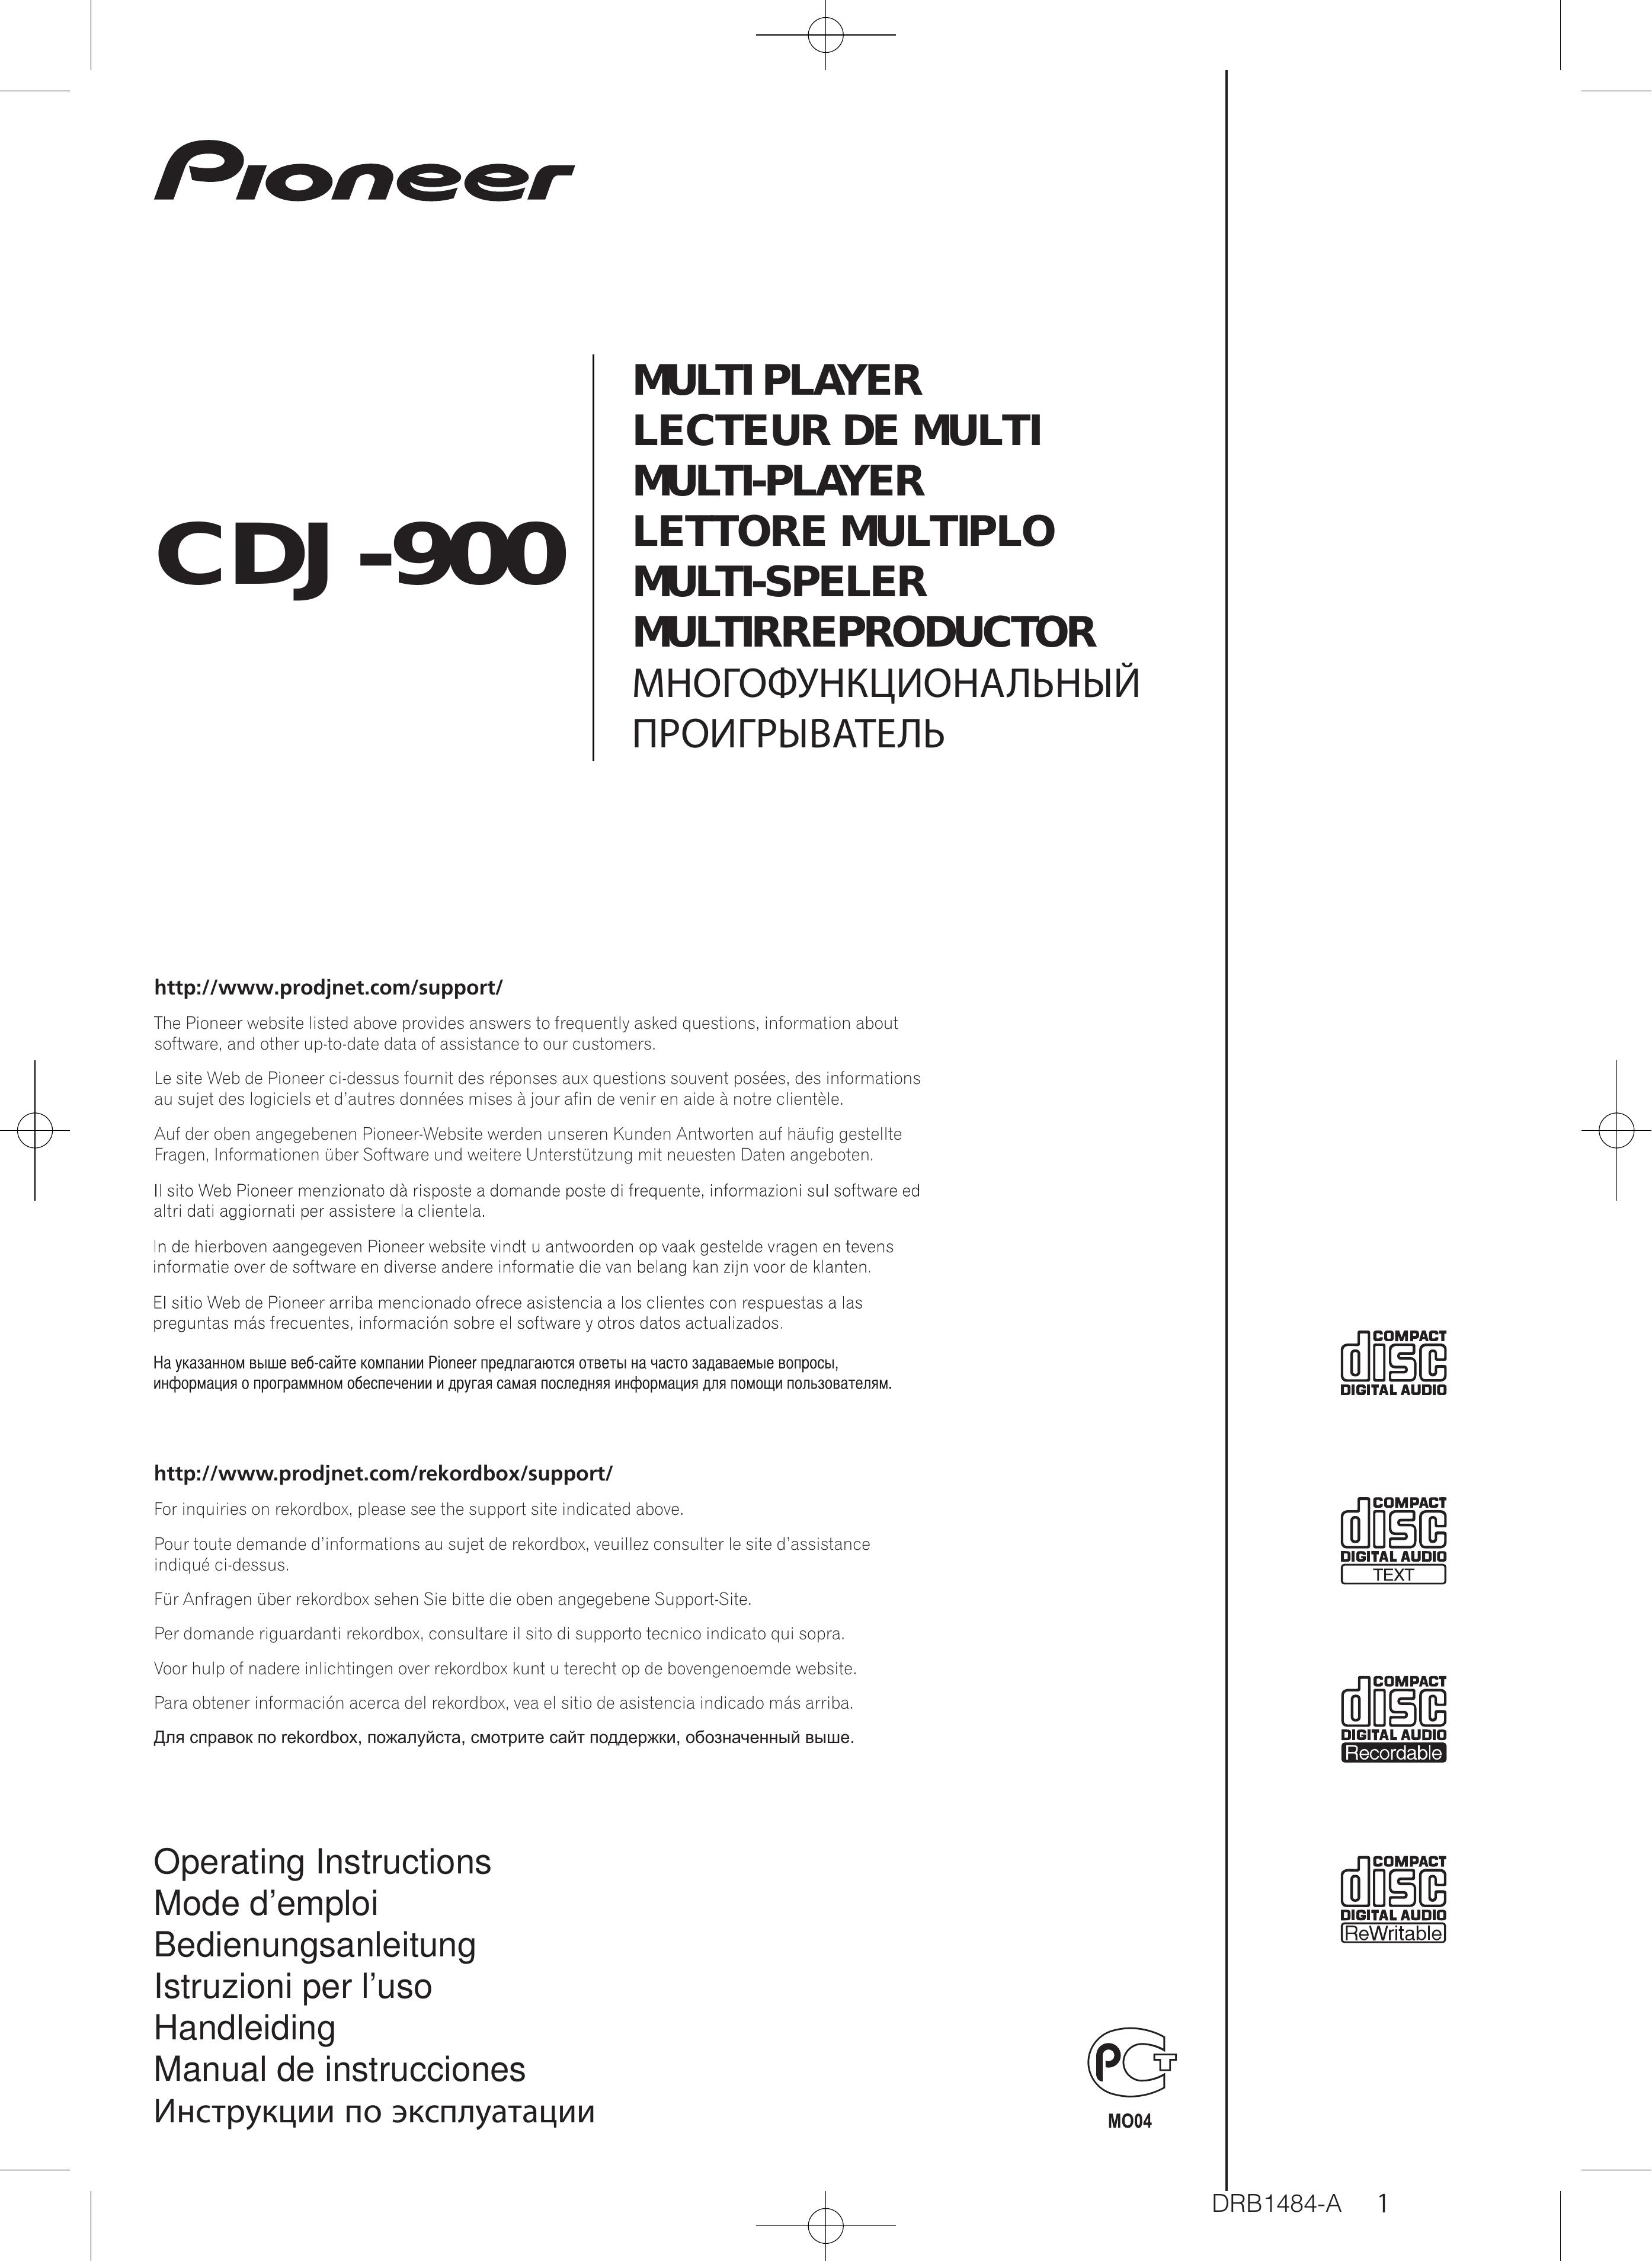 Pioneer CDJ-900 Multi-tool User Manual